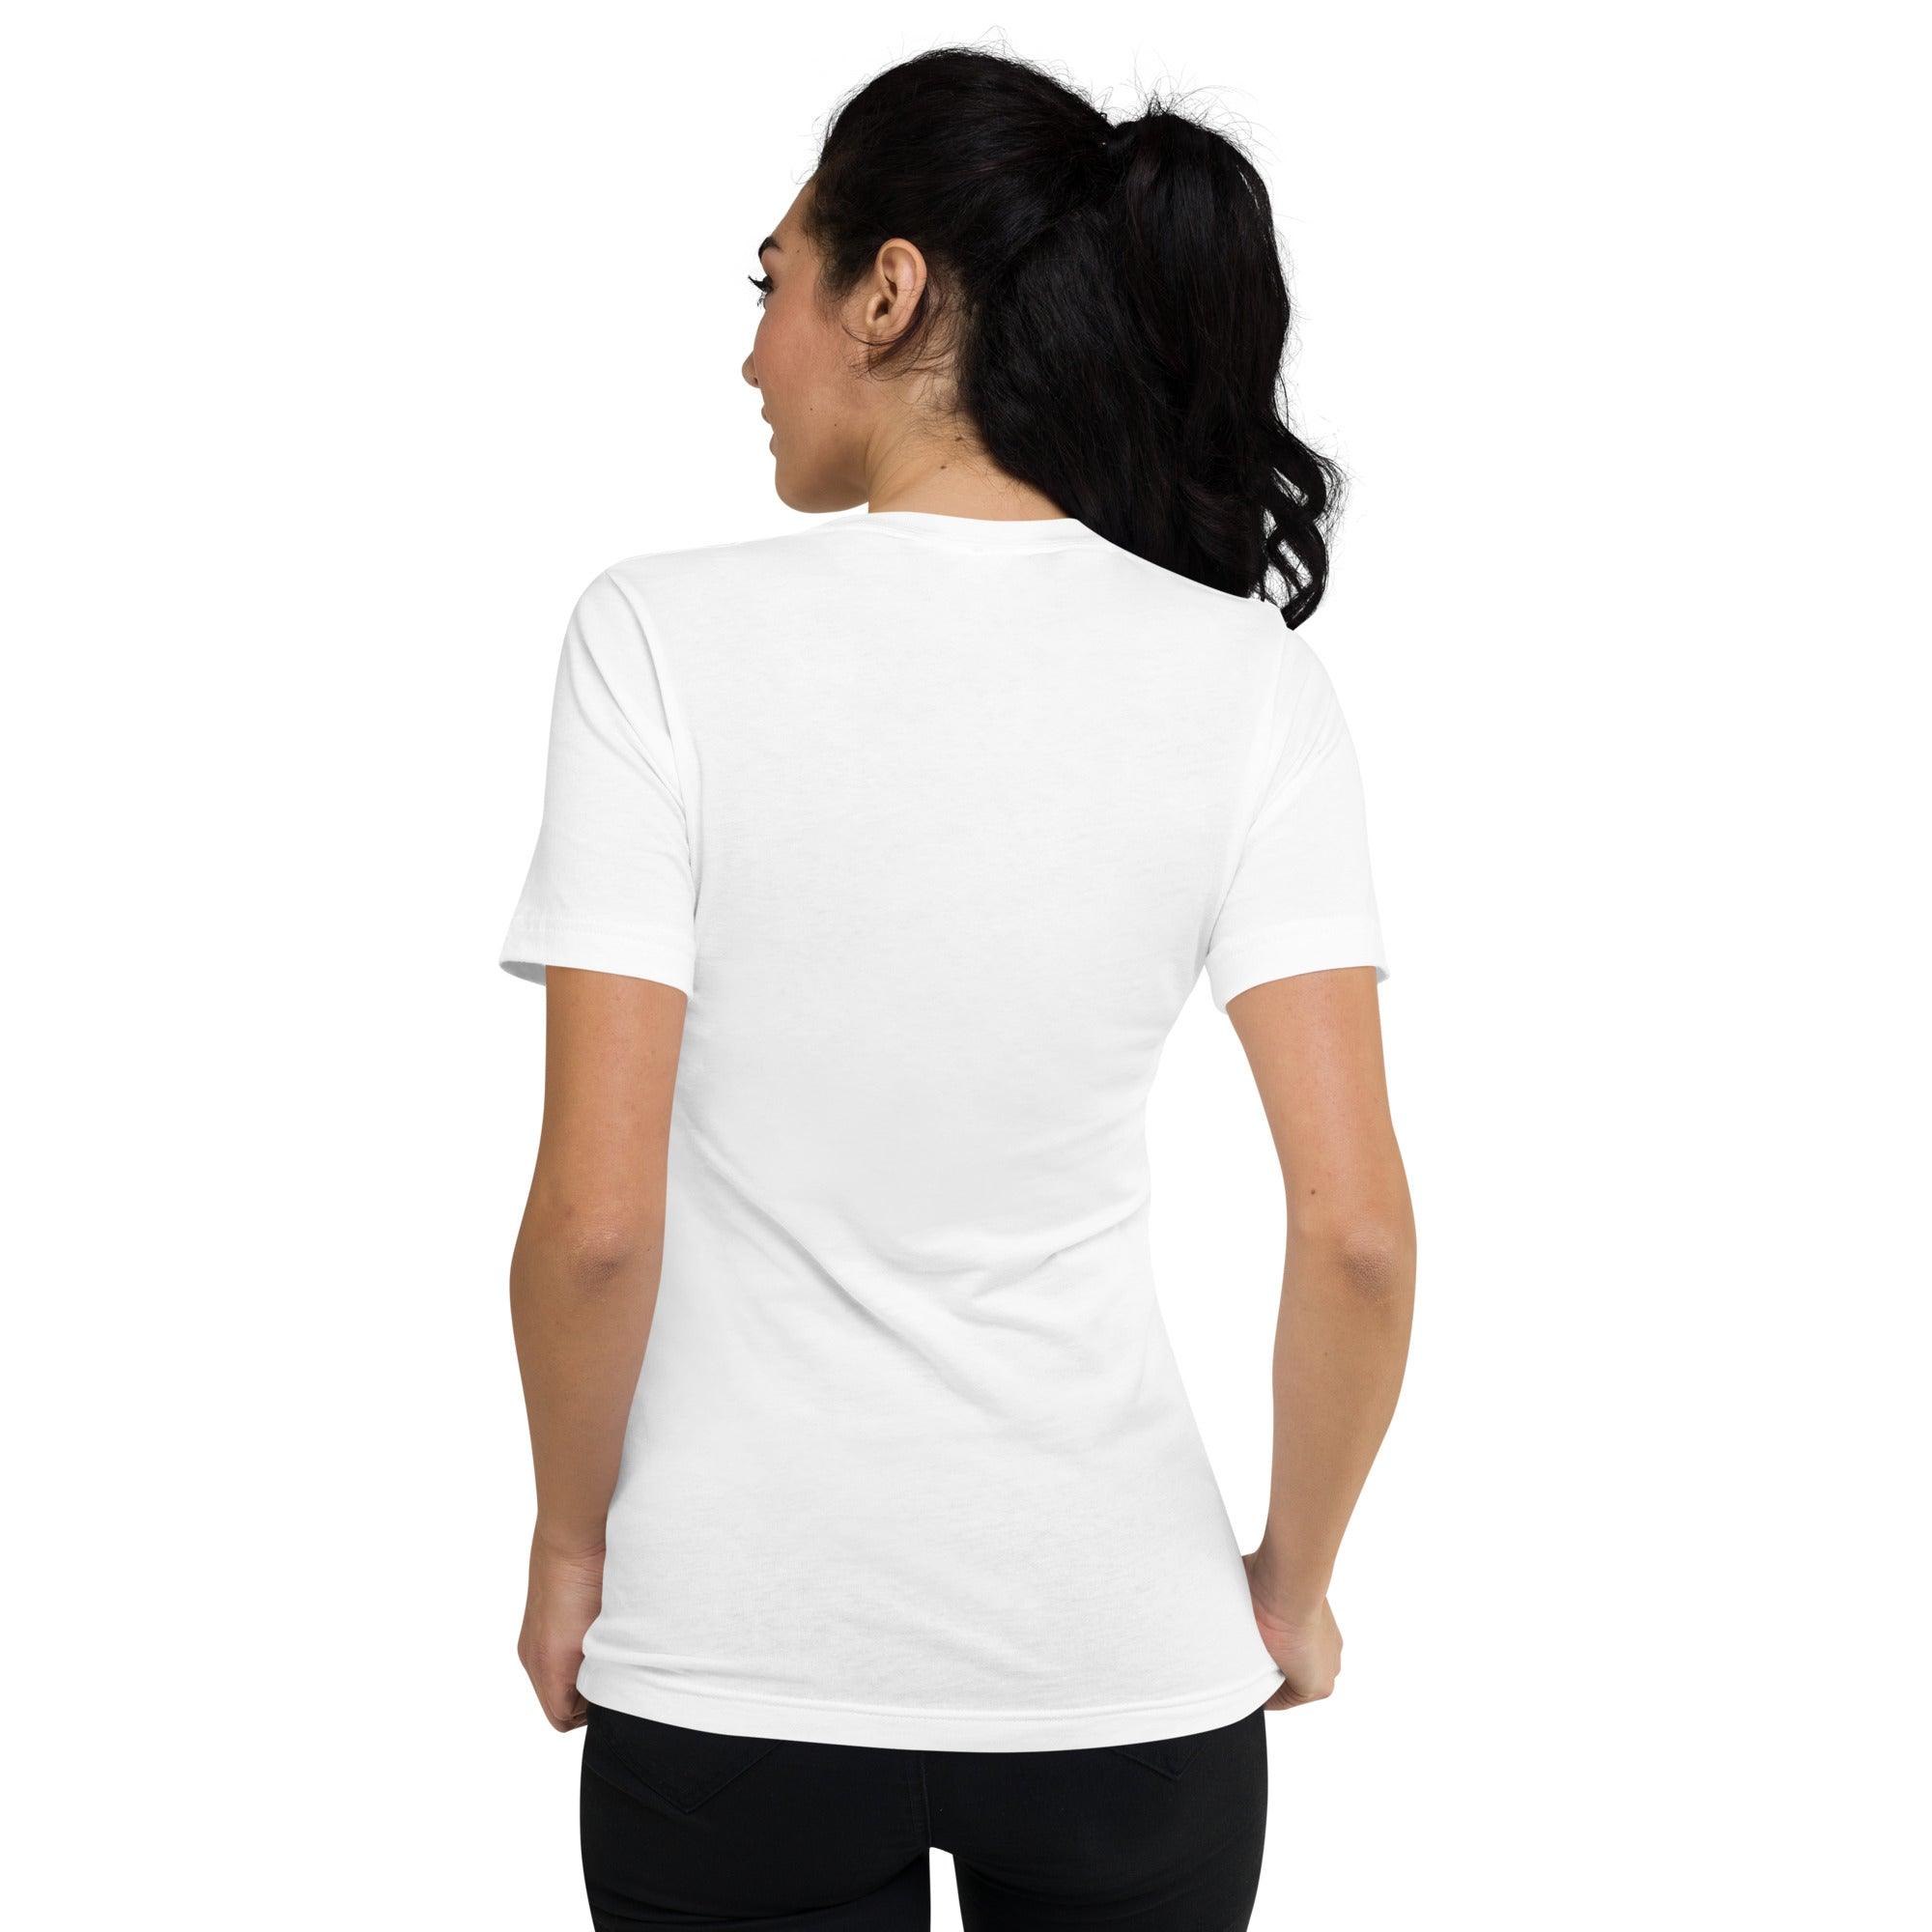 Infected Unisex Short Sleeve V-Neck T-Shirt - Beyond T-shirts